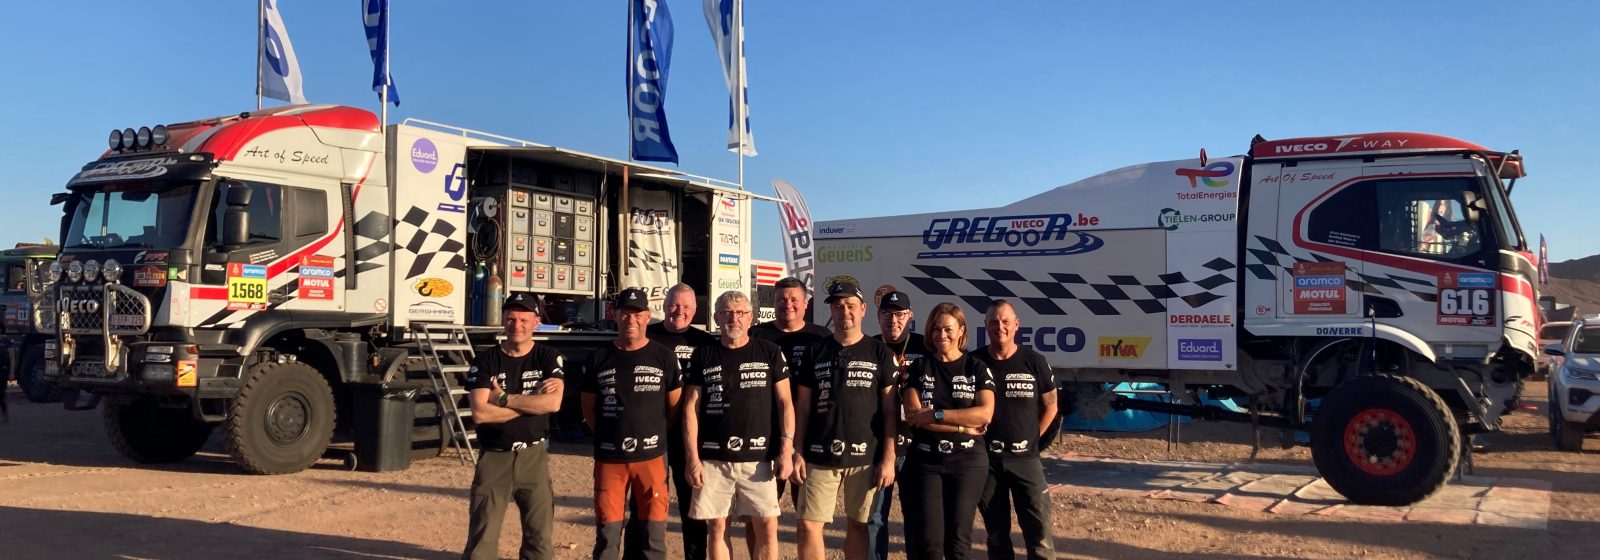 Igor Bouwens derde deelname Dakar-rally